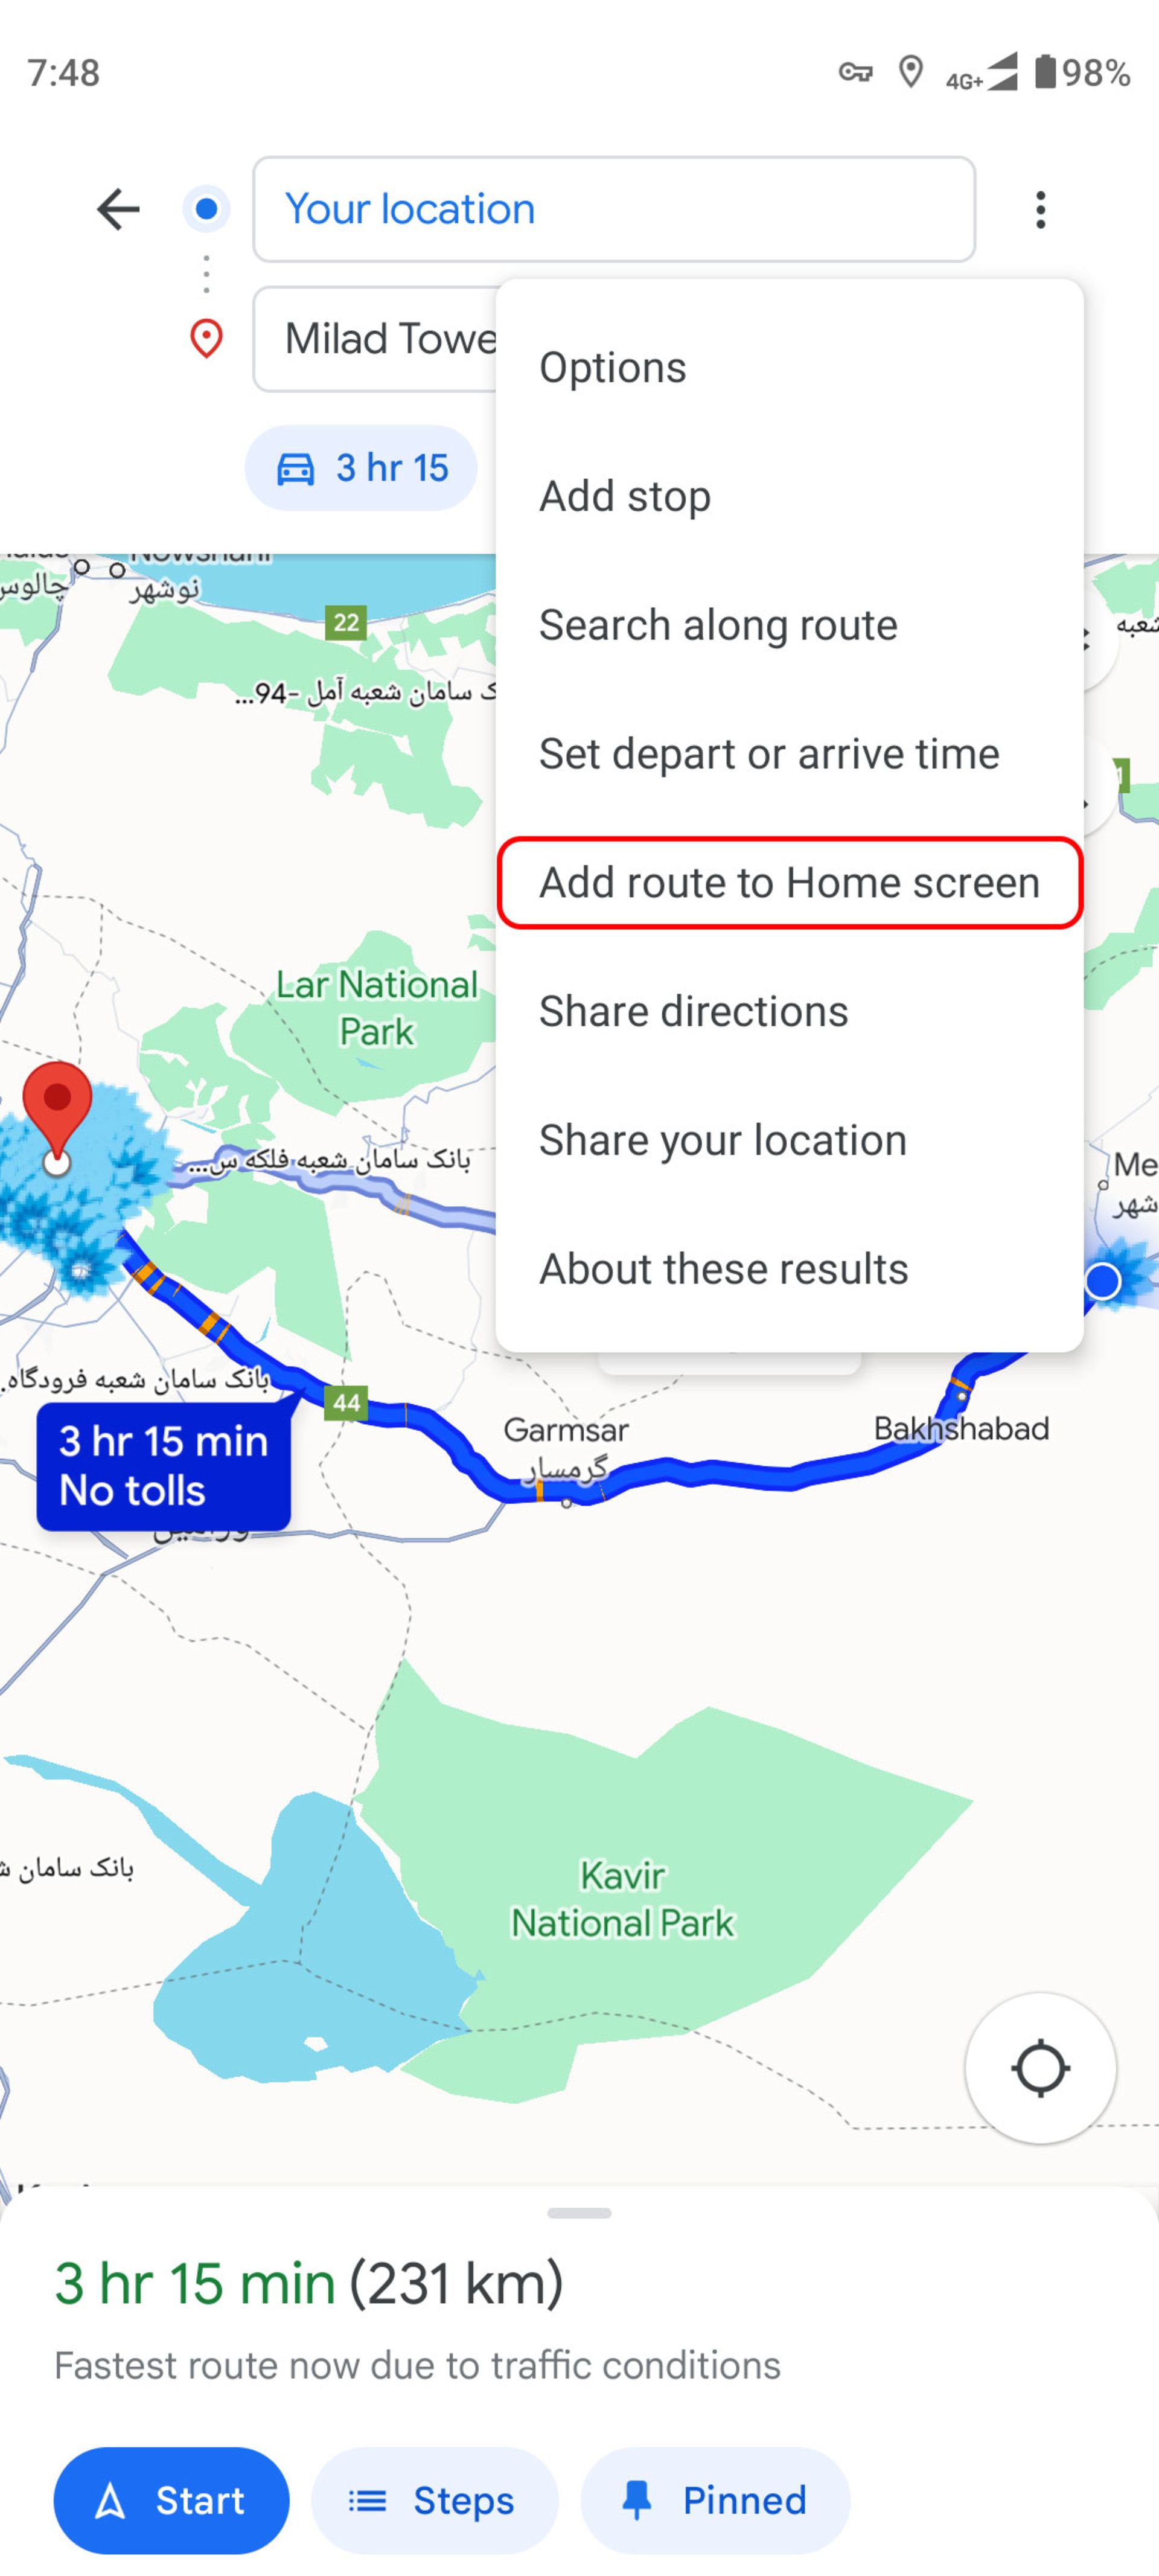 انتخاب Add route to Home screen در گوگل مپ